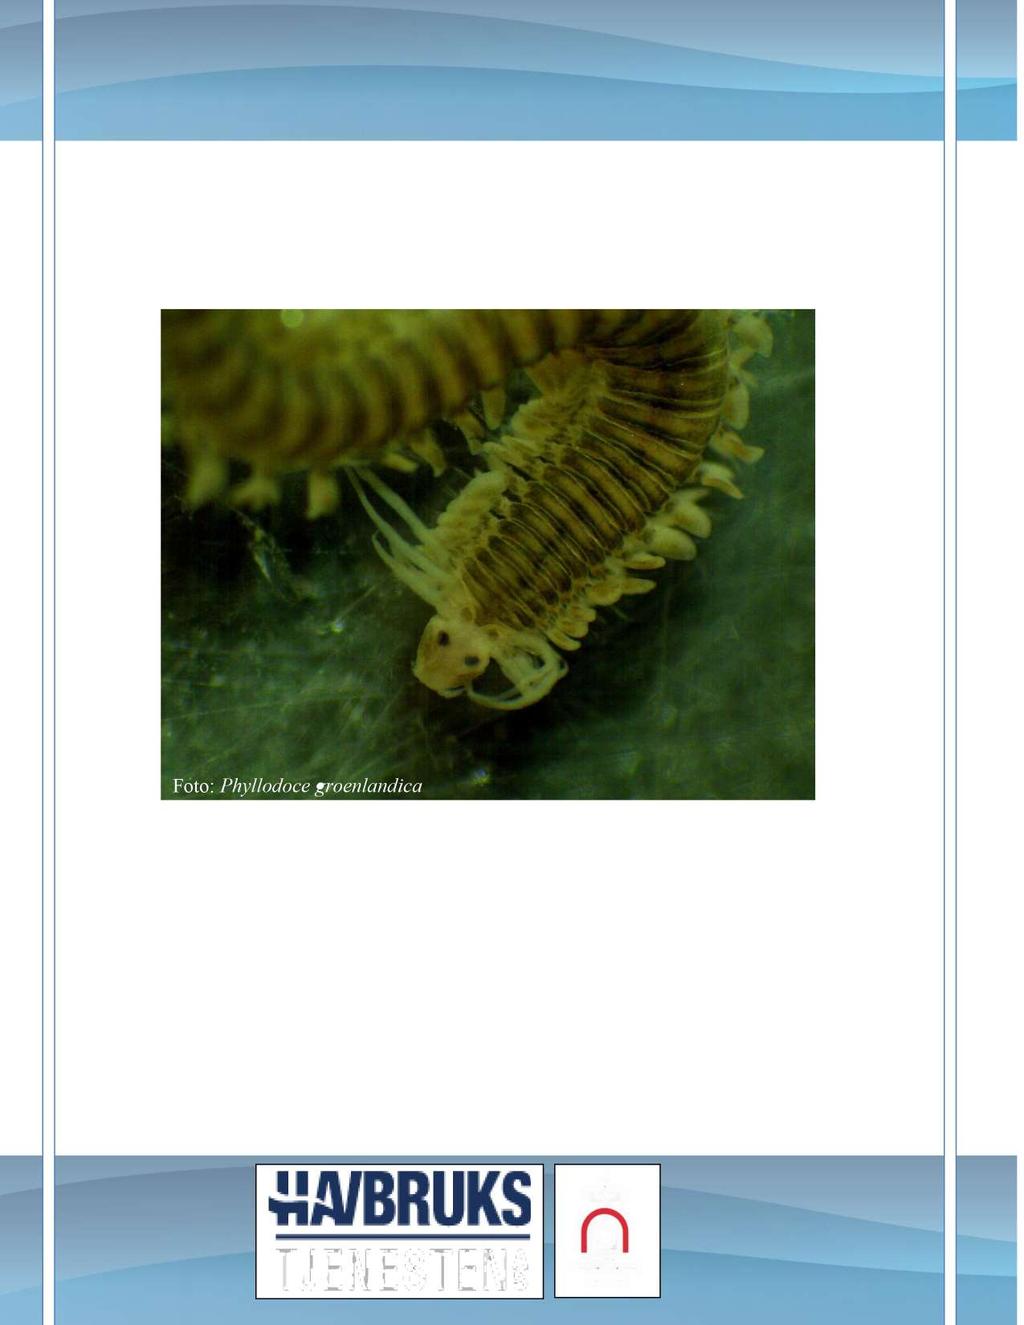 Bløtbunns faunaundersøkelse NS - EN ISO 16665 :2013 Foto: Phyllodoce groenlandica L okalitet: